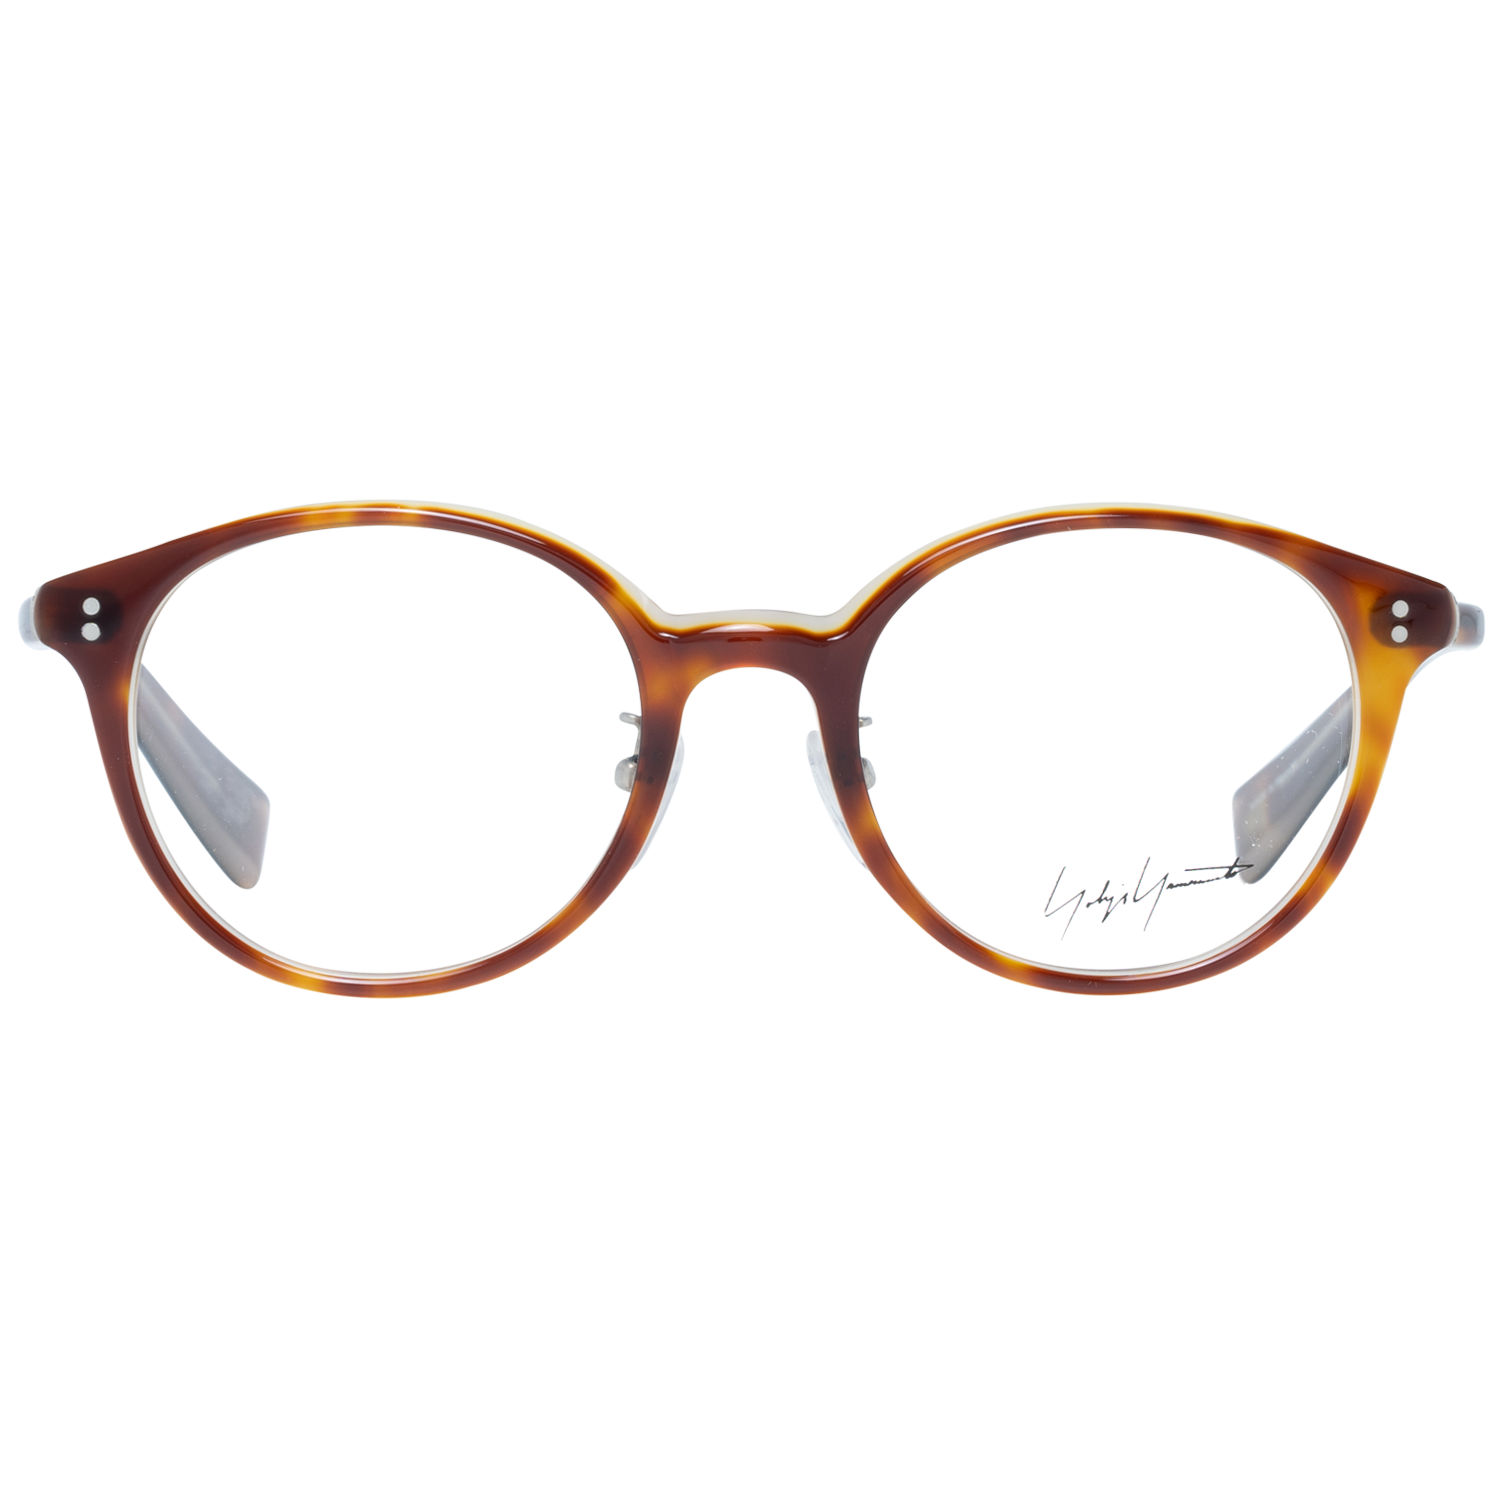 Yohji Yamamoto Frames Yohji Yamamoto Optical Frame YY1020 101 49 Eyeglasses Eyewear UK USA Australia 